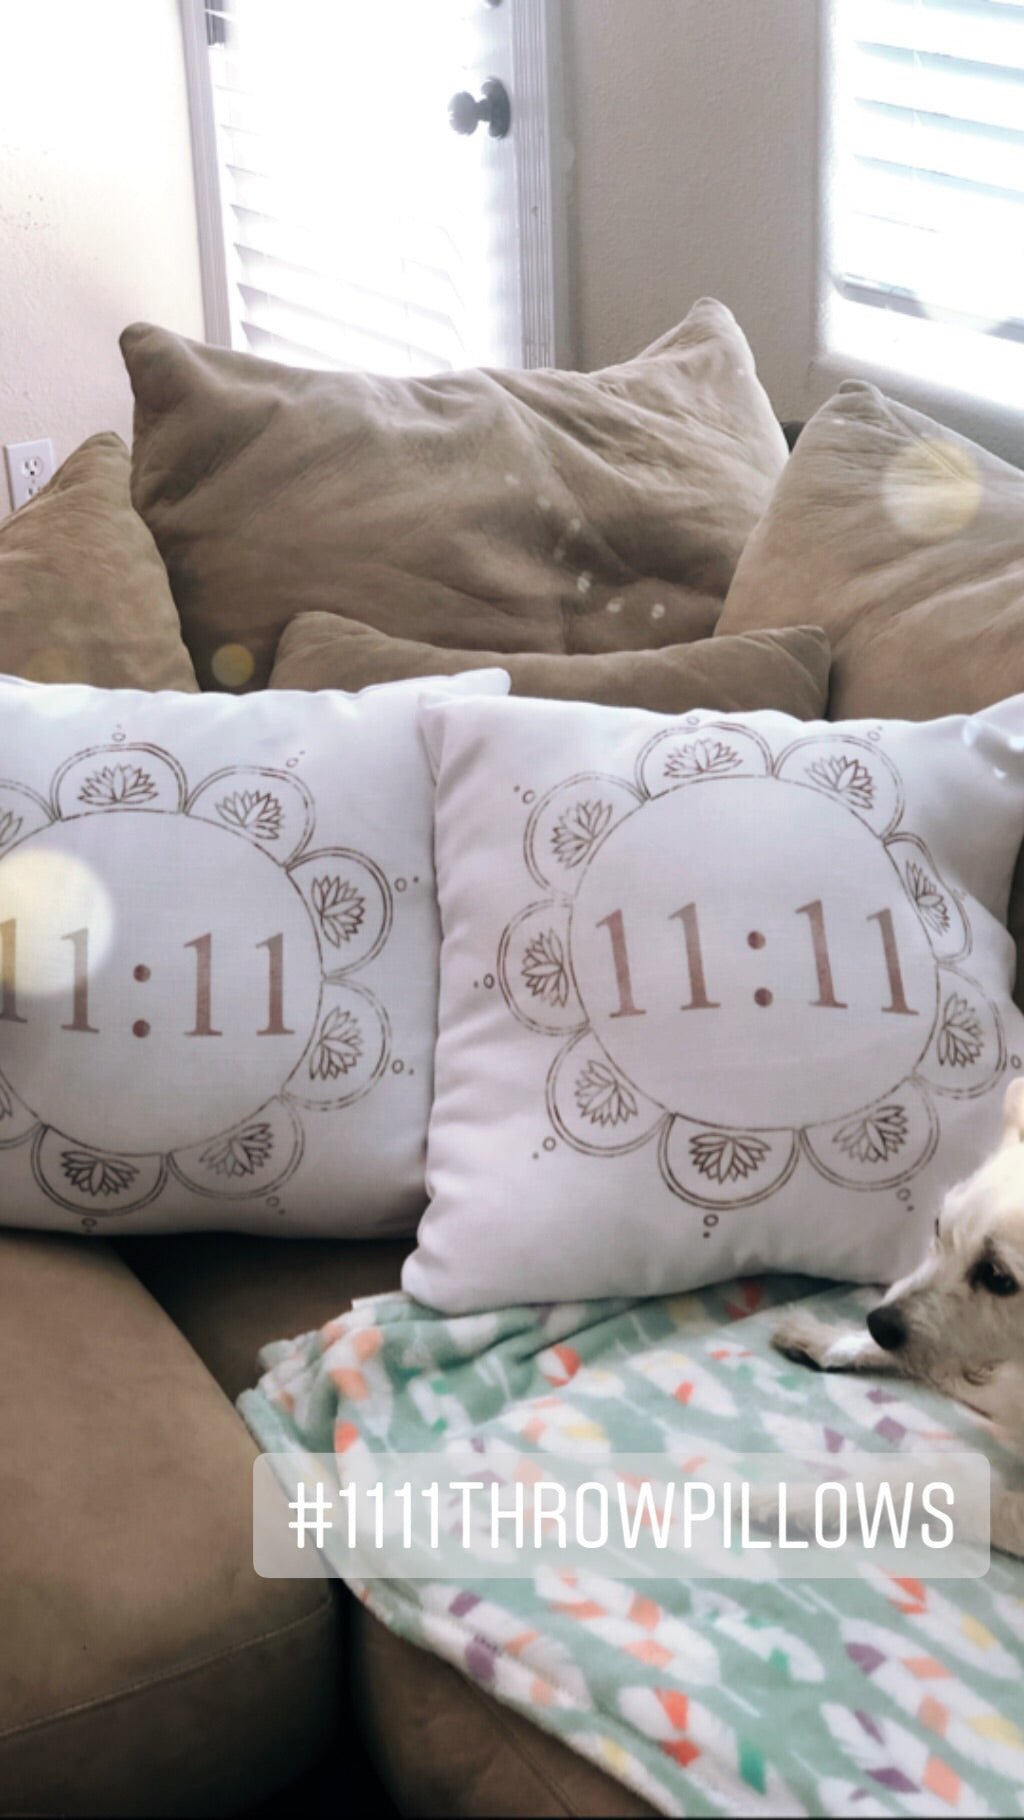 11:11 Throw Pillows